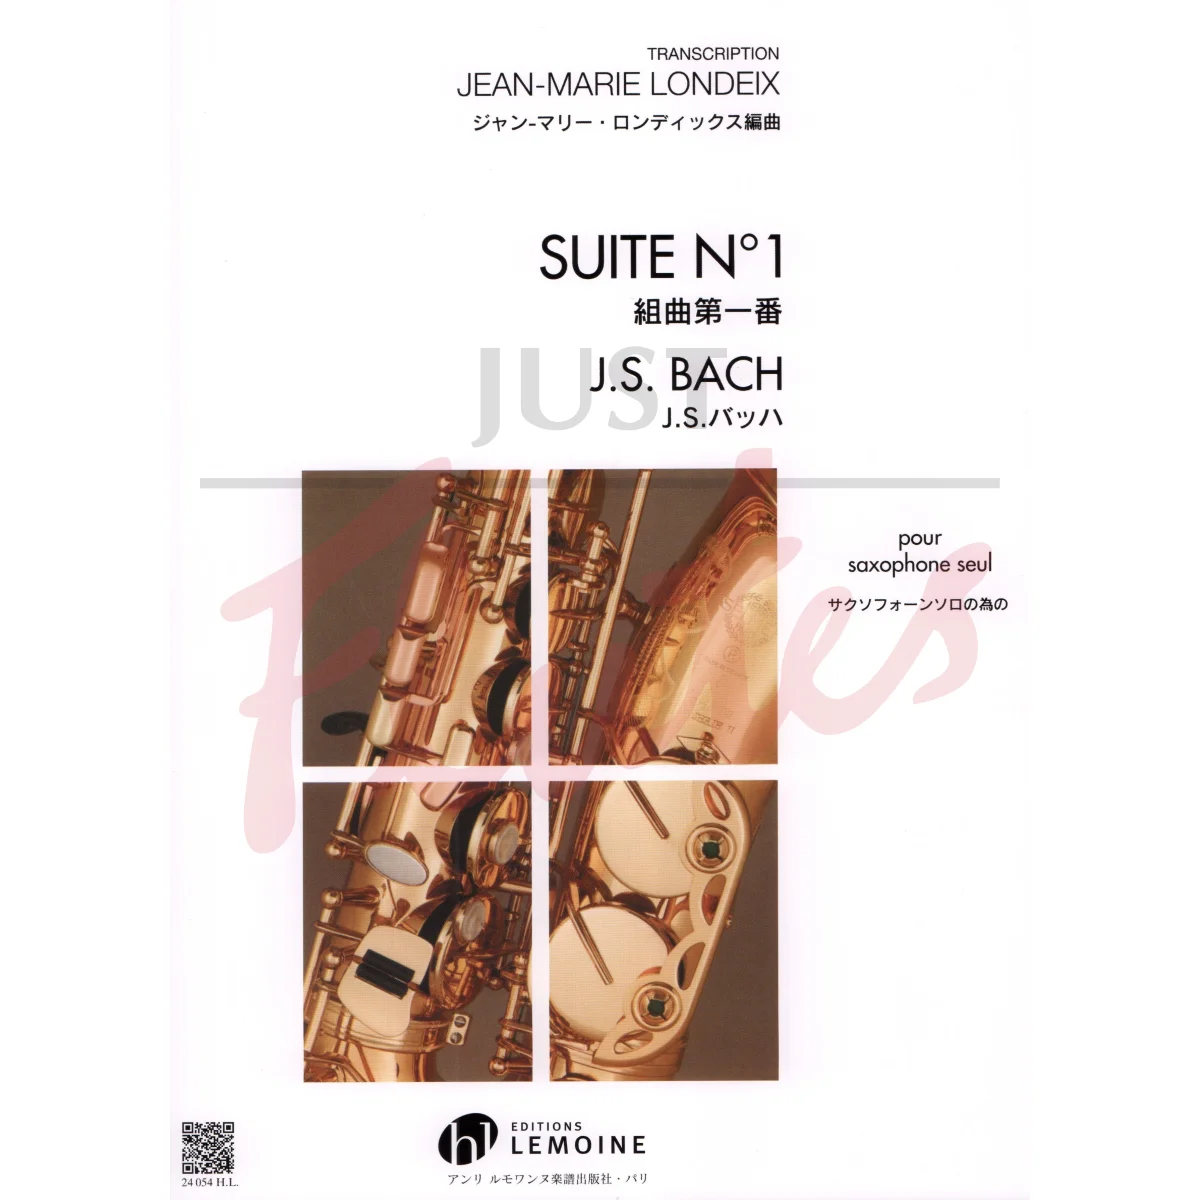 Suite No. 1 for Solo Saxophone